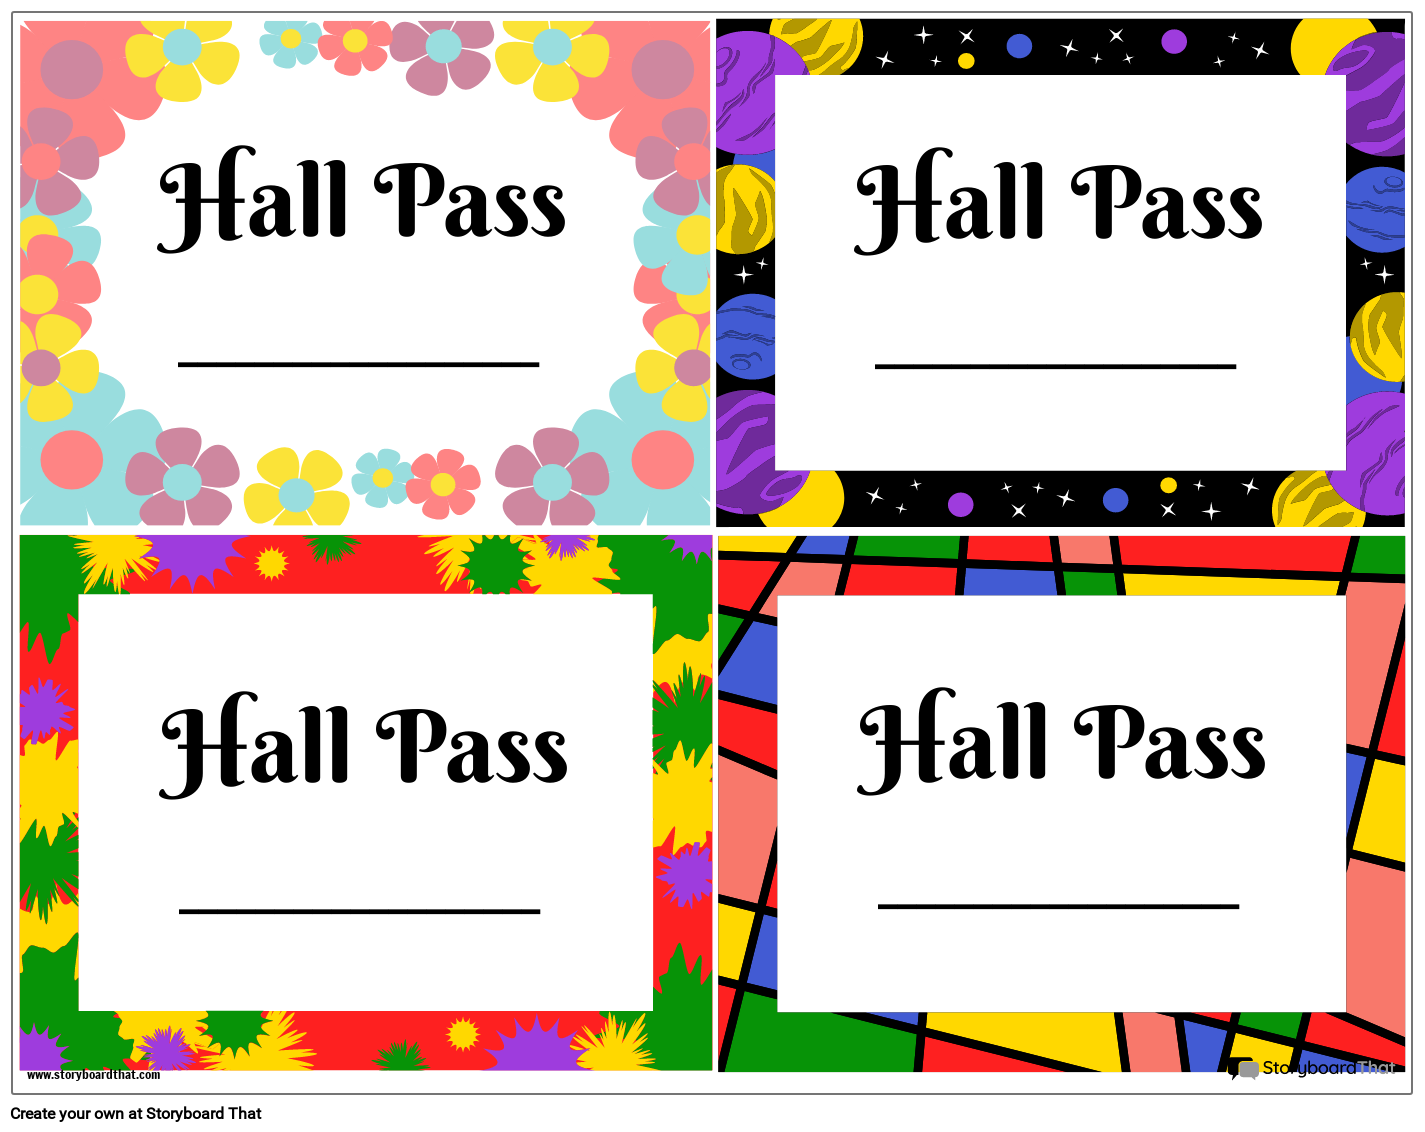 Hall Pass Template Hall Pass Maker StoryboardThat